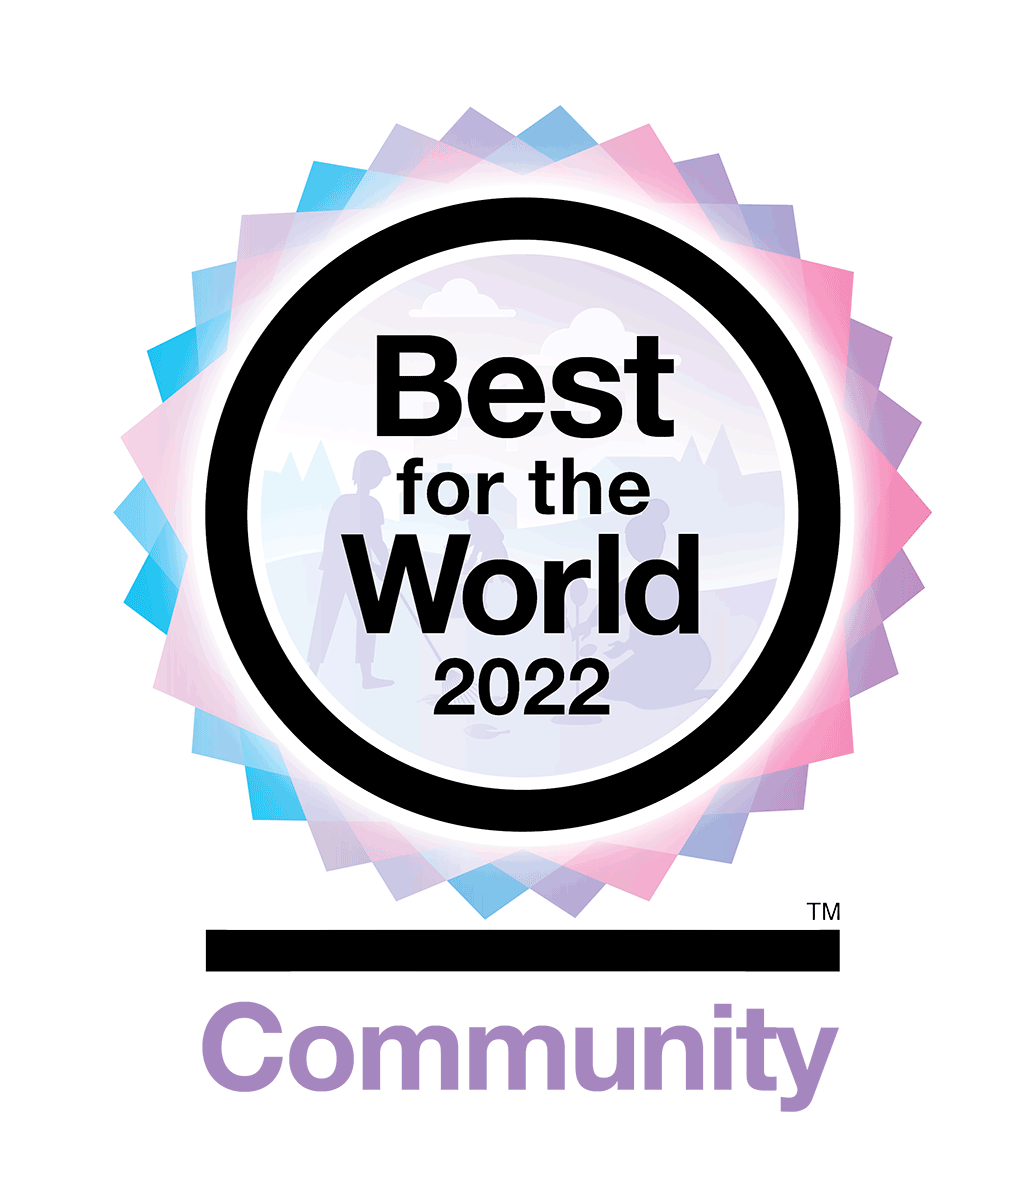 Best for the World 2022 Award for Community